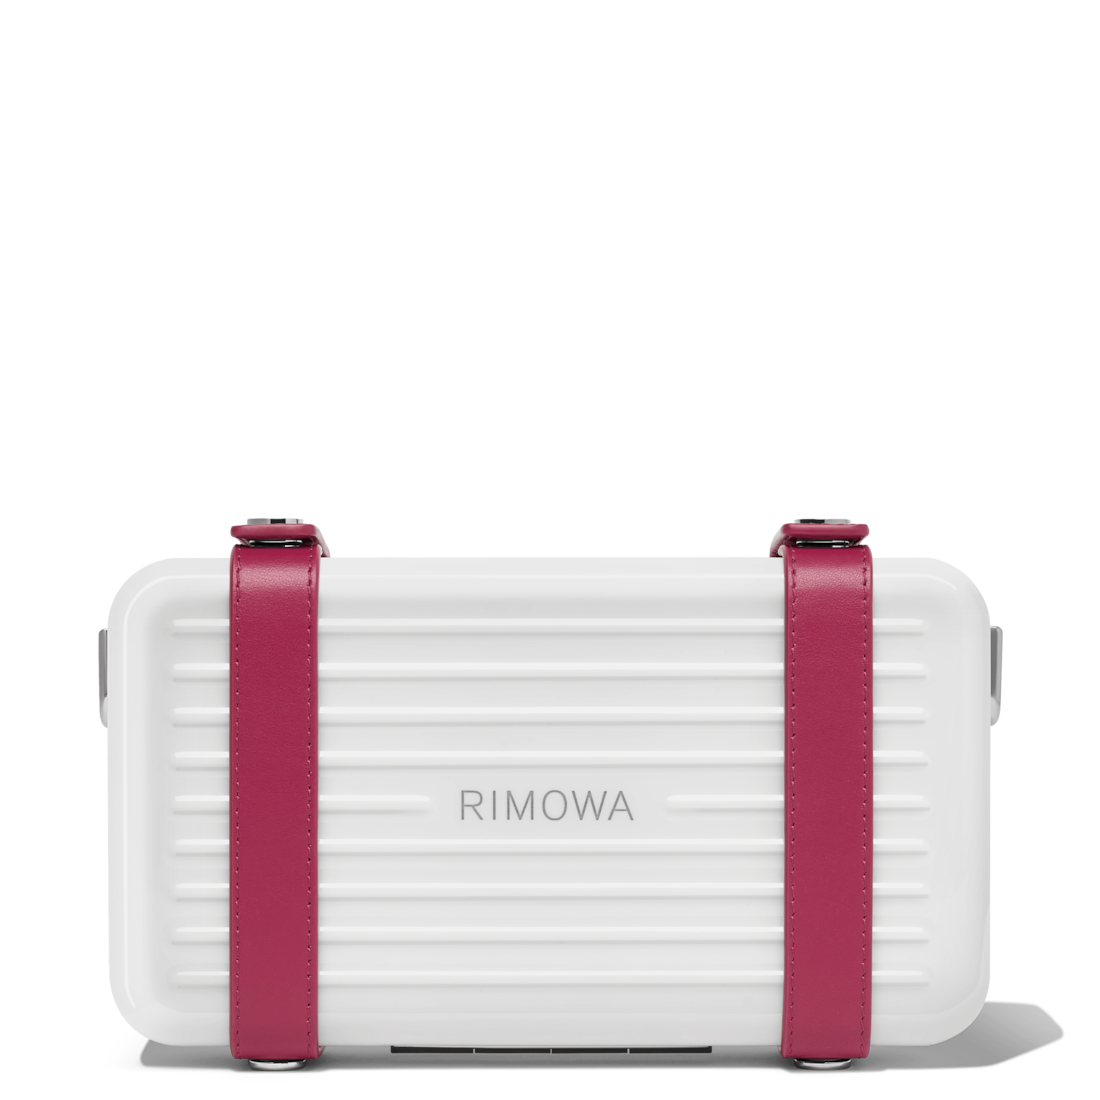 Personal Polycarbonate Cross-Body Bag | White & Raspberry pink | RIMOWA